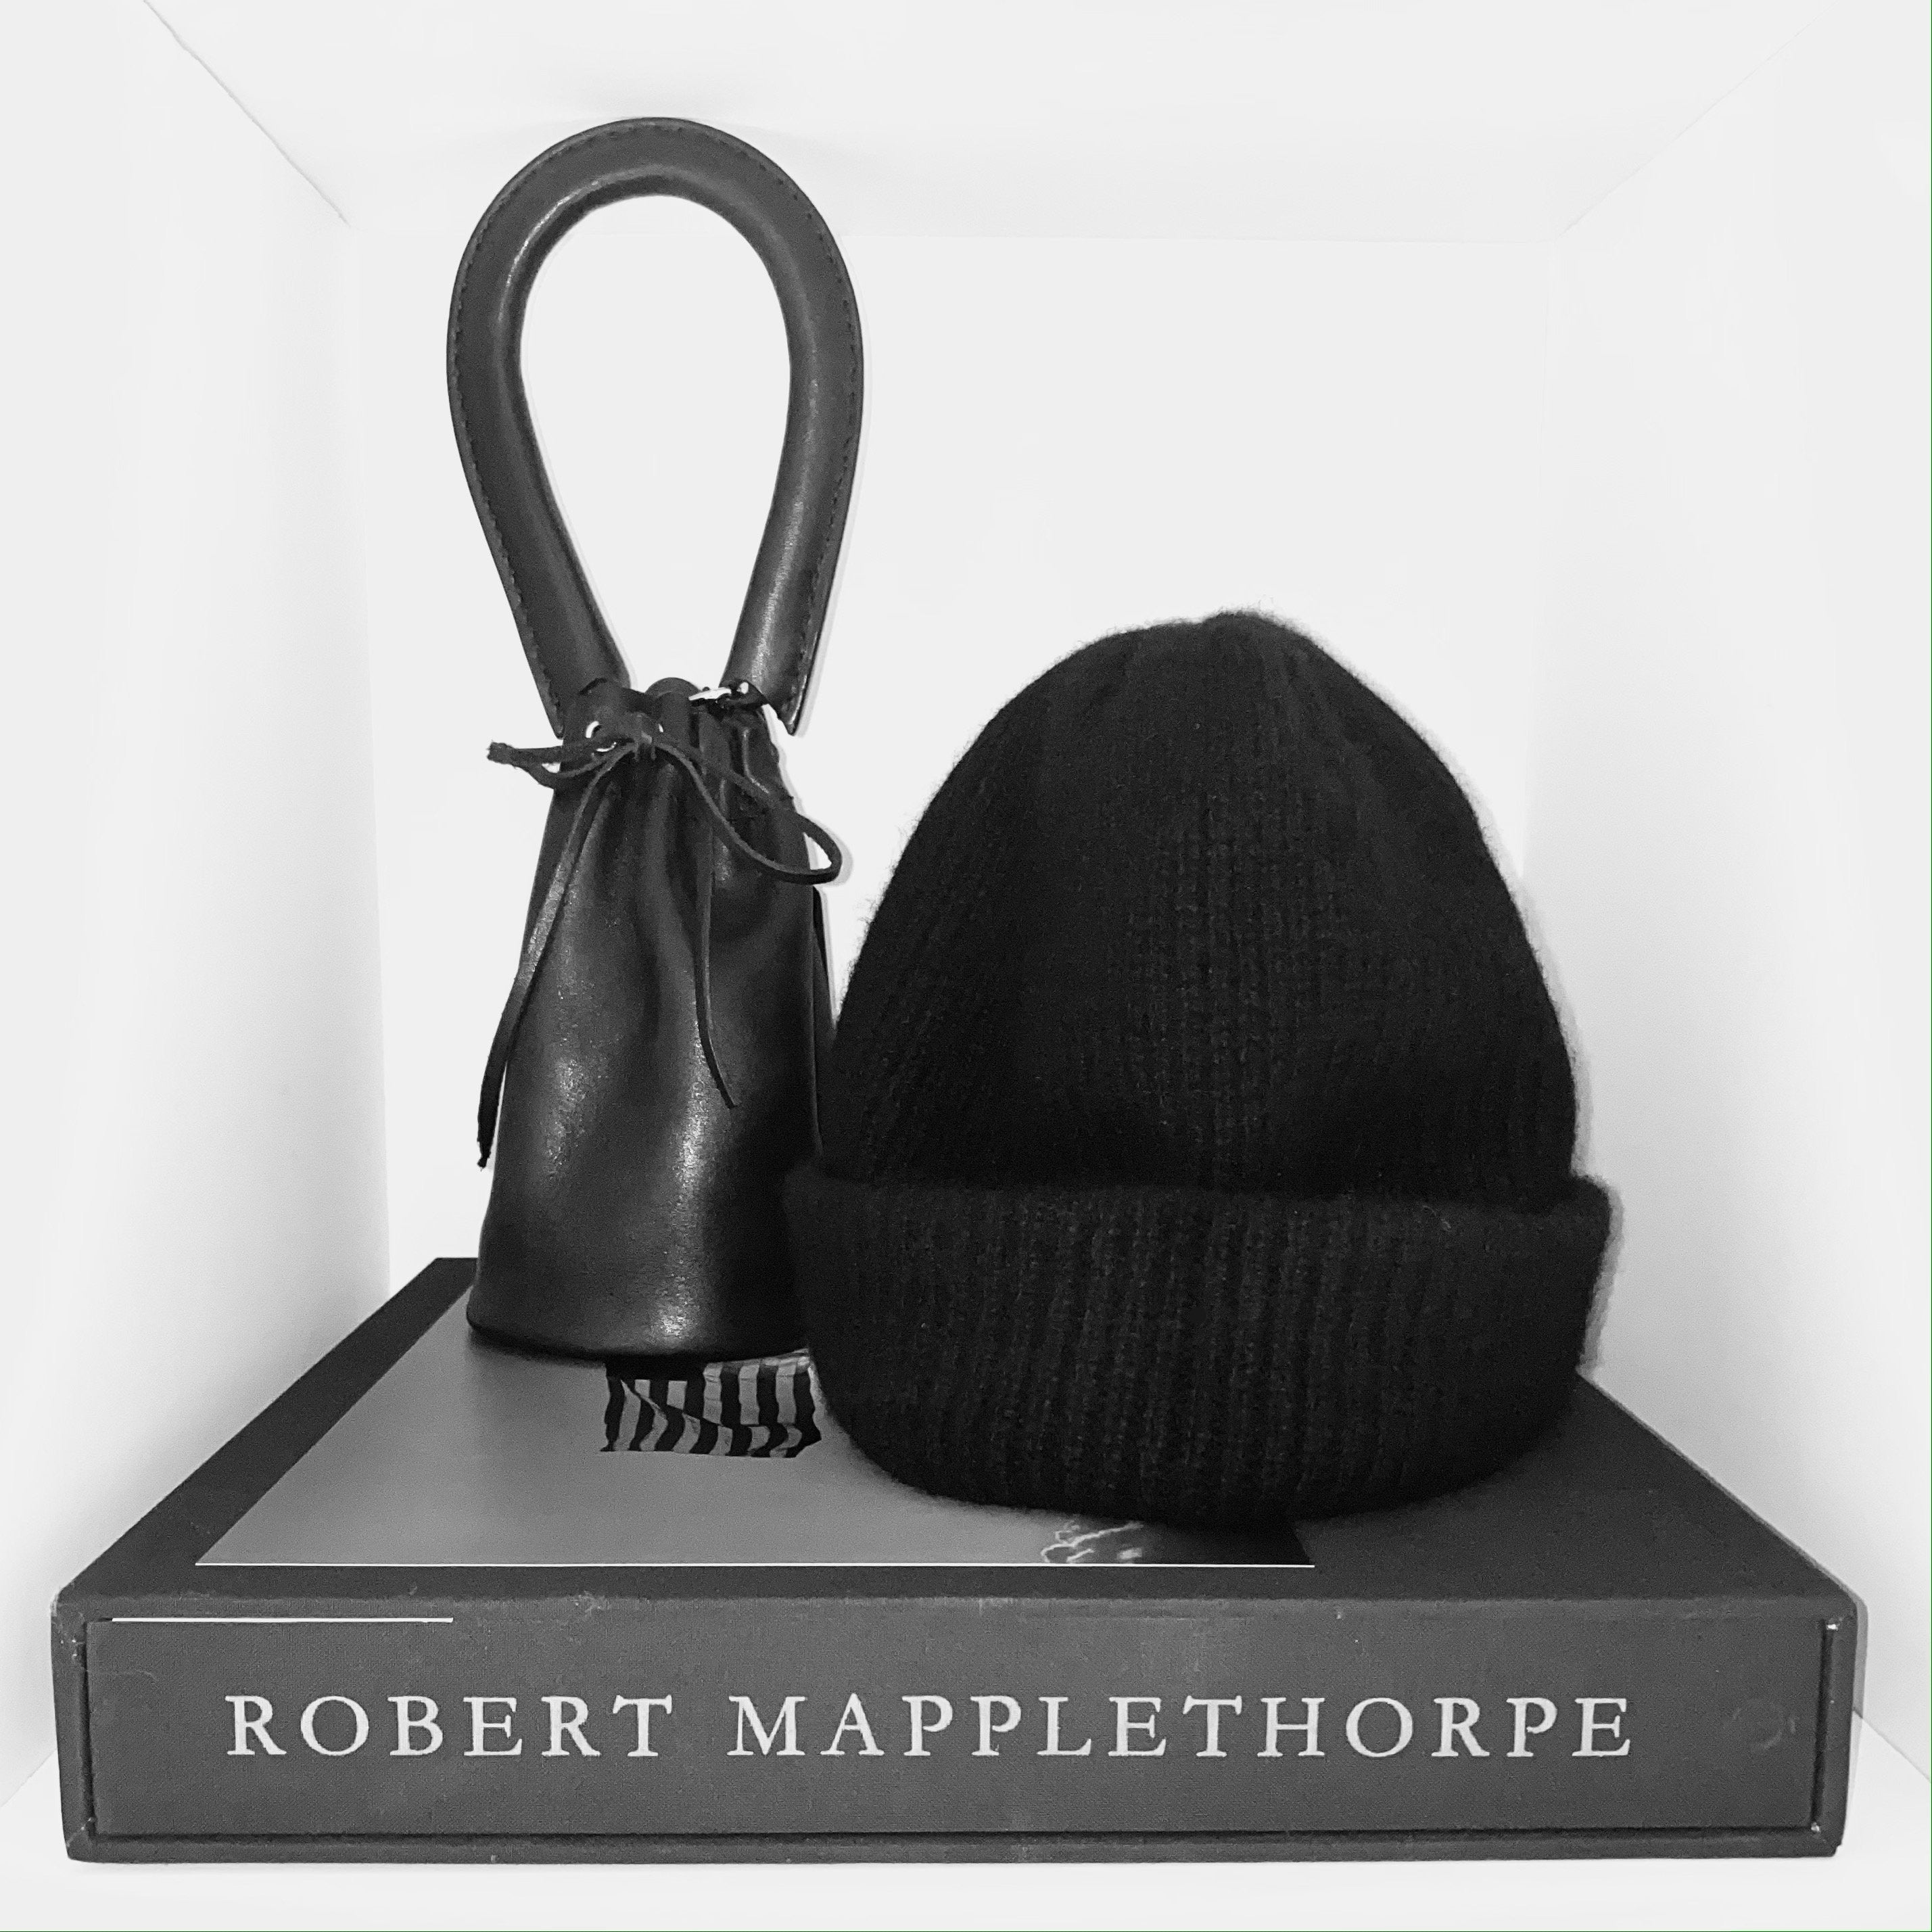 ROBERT MAPPLETHORPE BOOK by PHAIDON